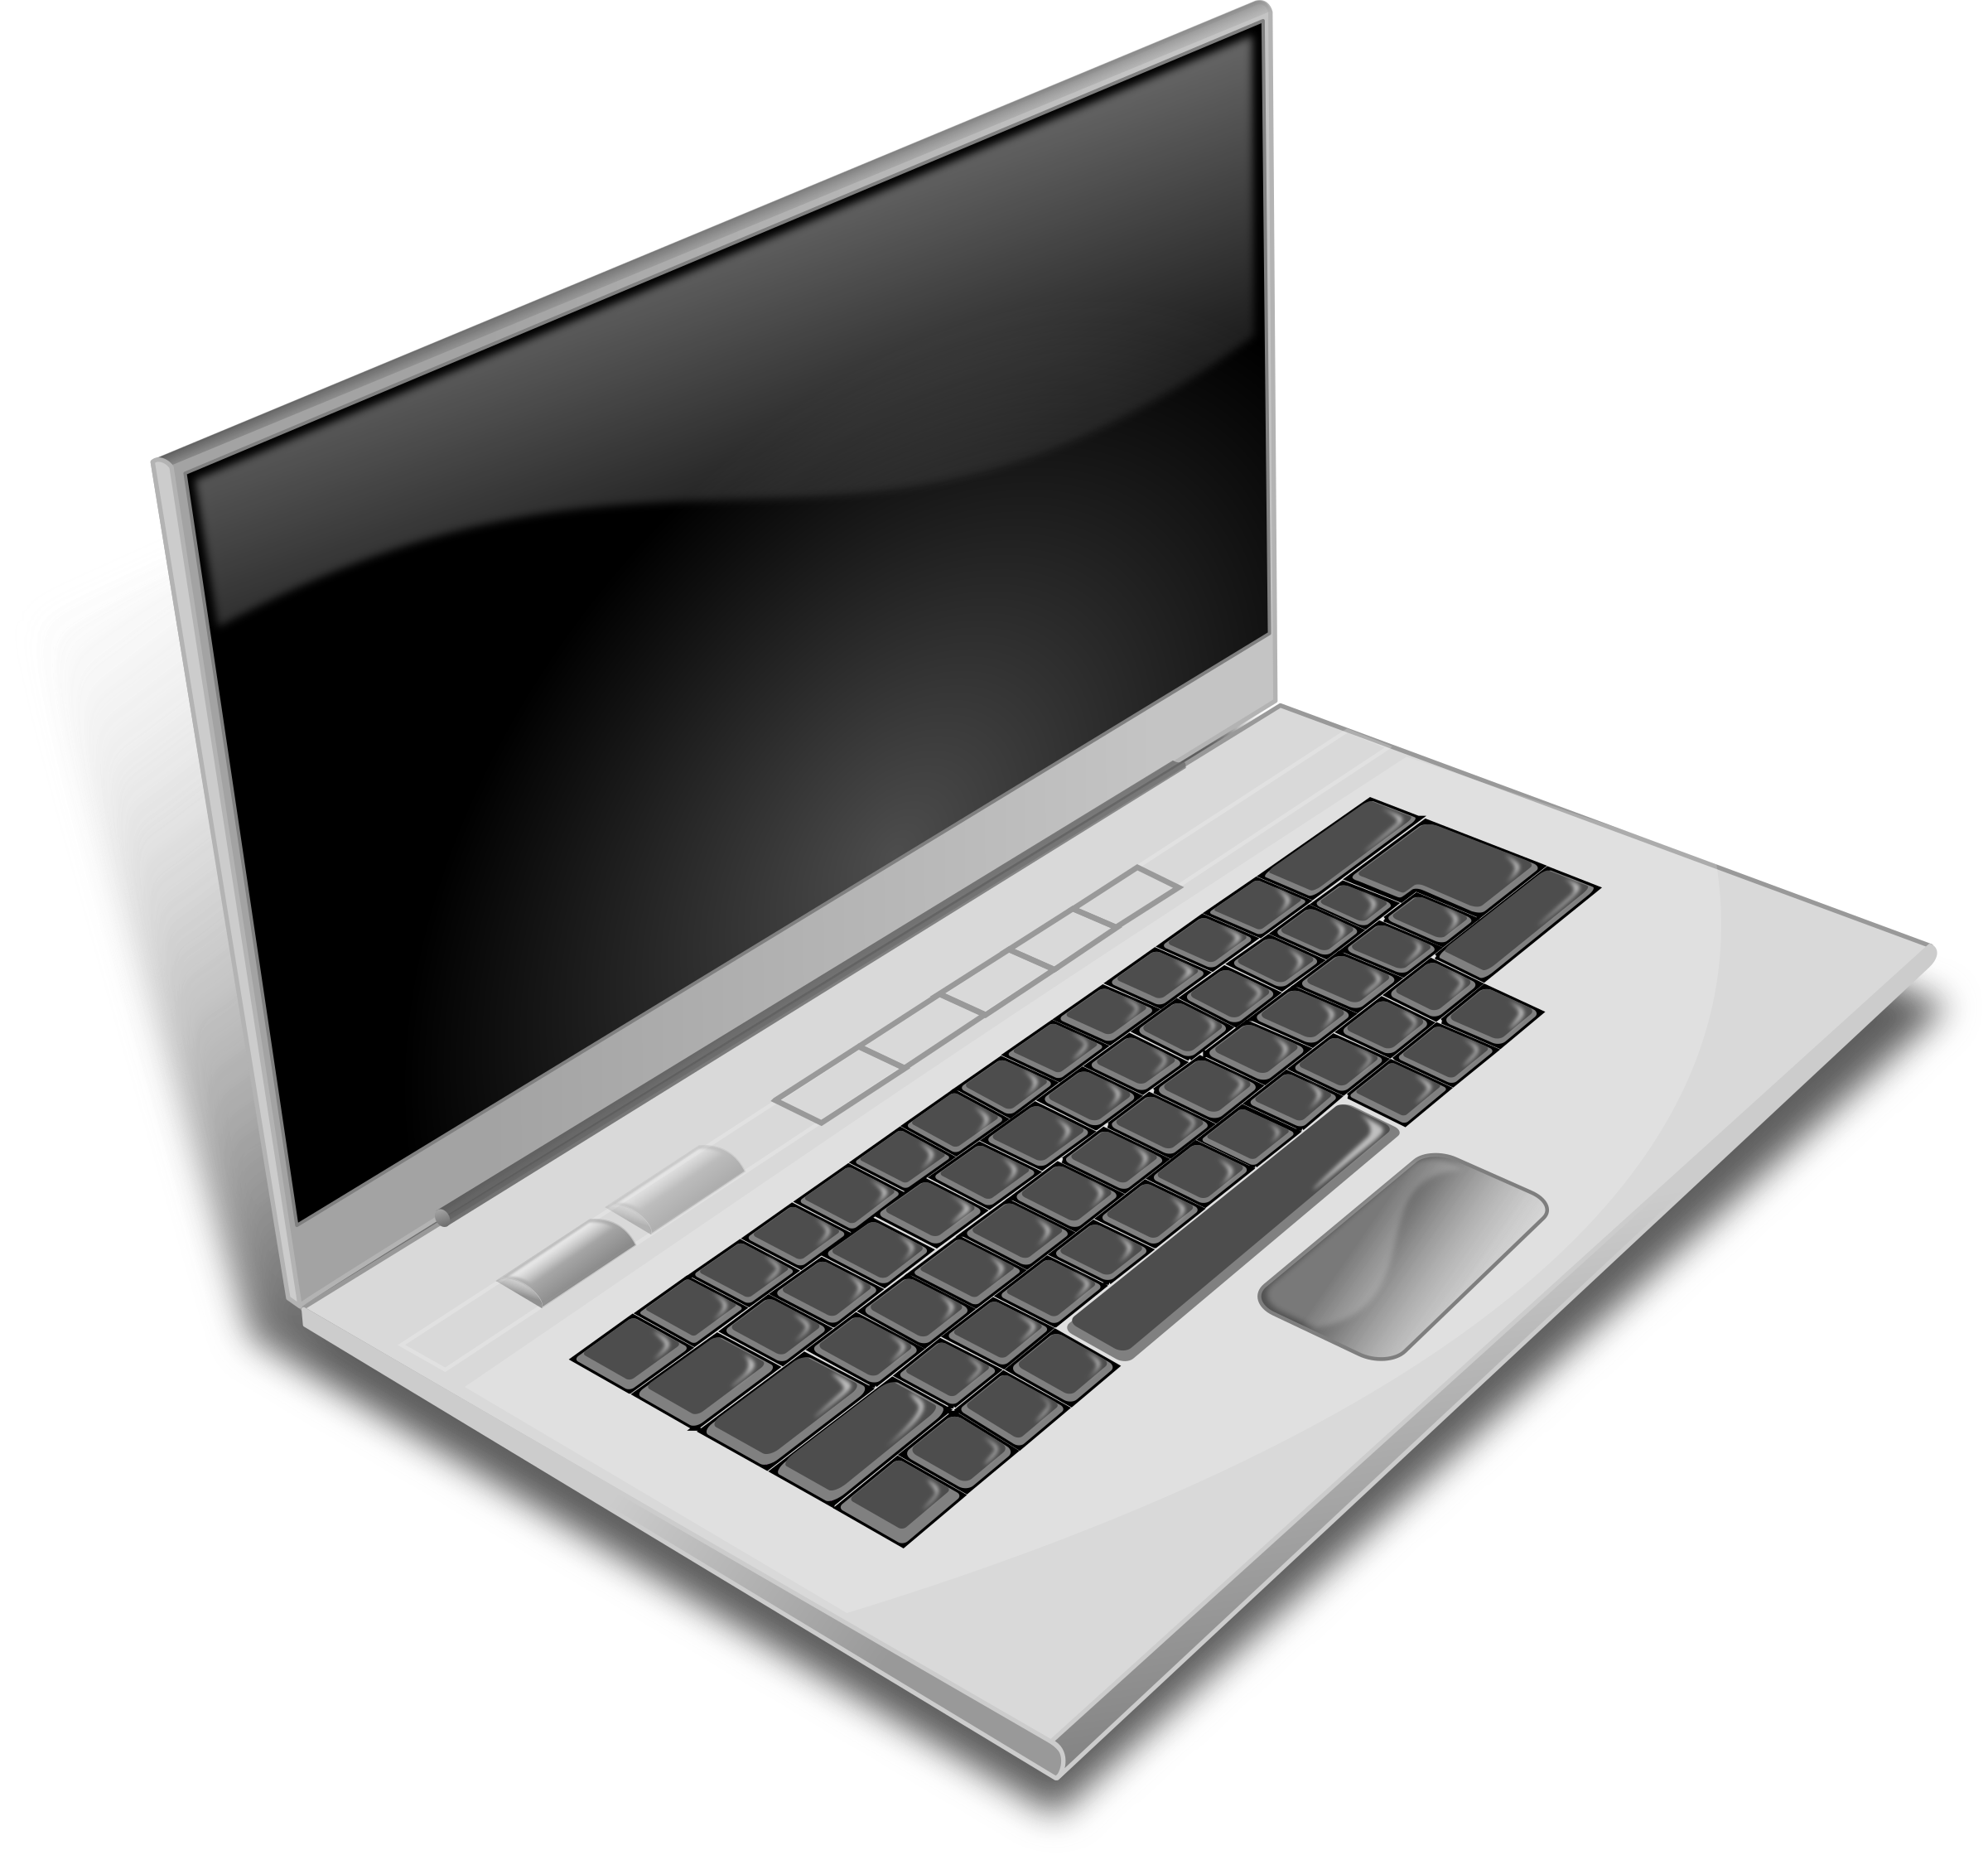 Laptop electronic device